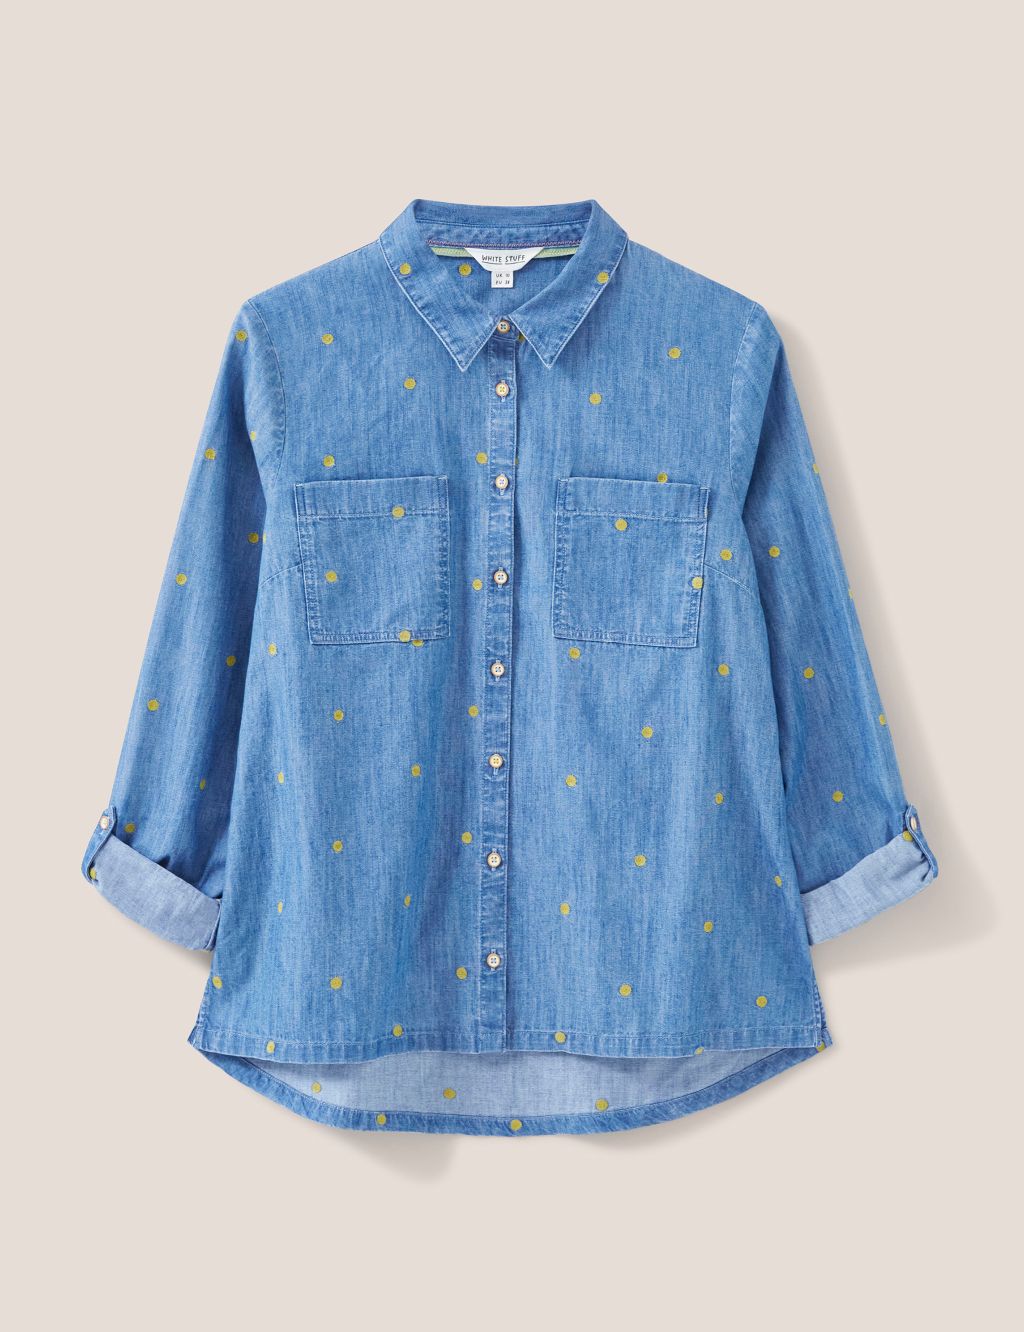 Denim Polka Dot Embroidered Collared Shirt image 2